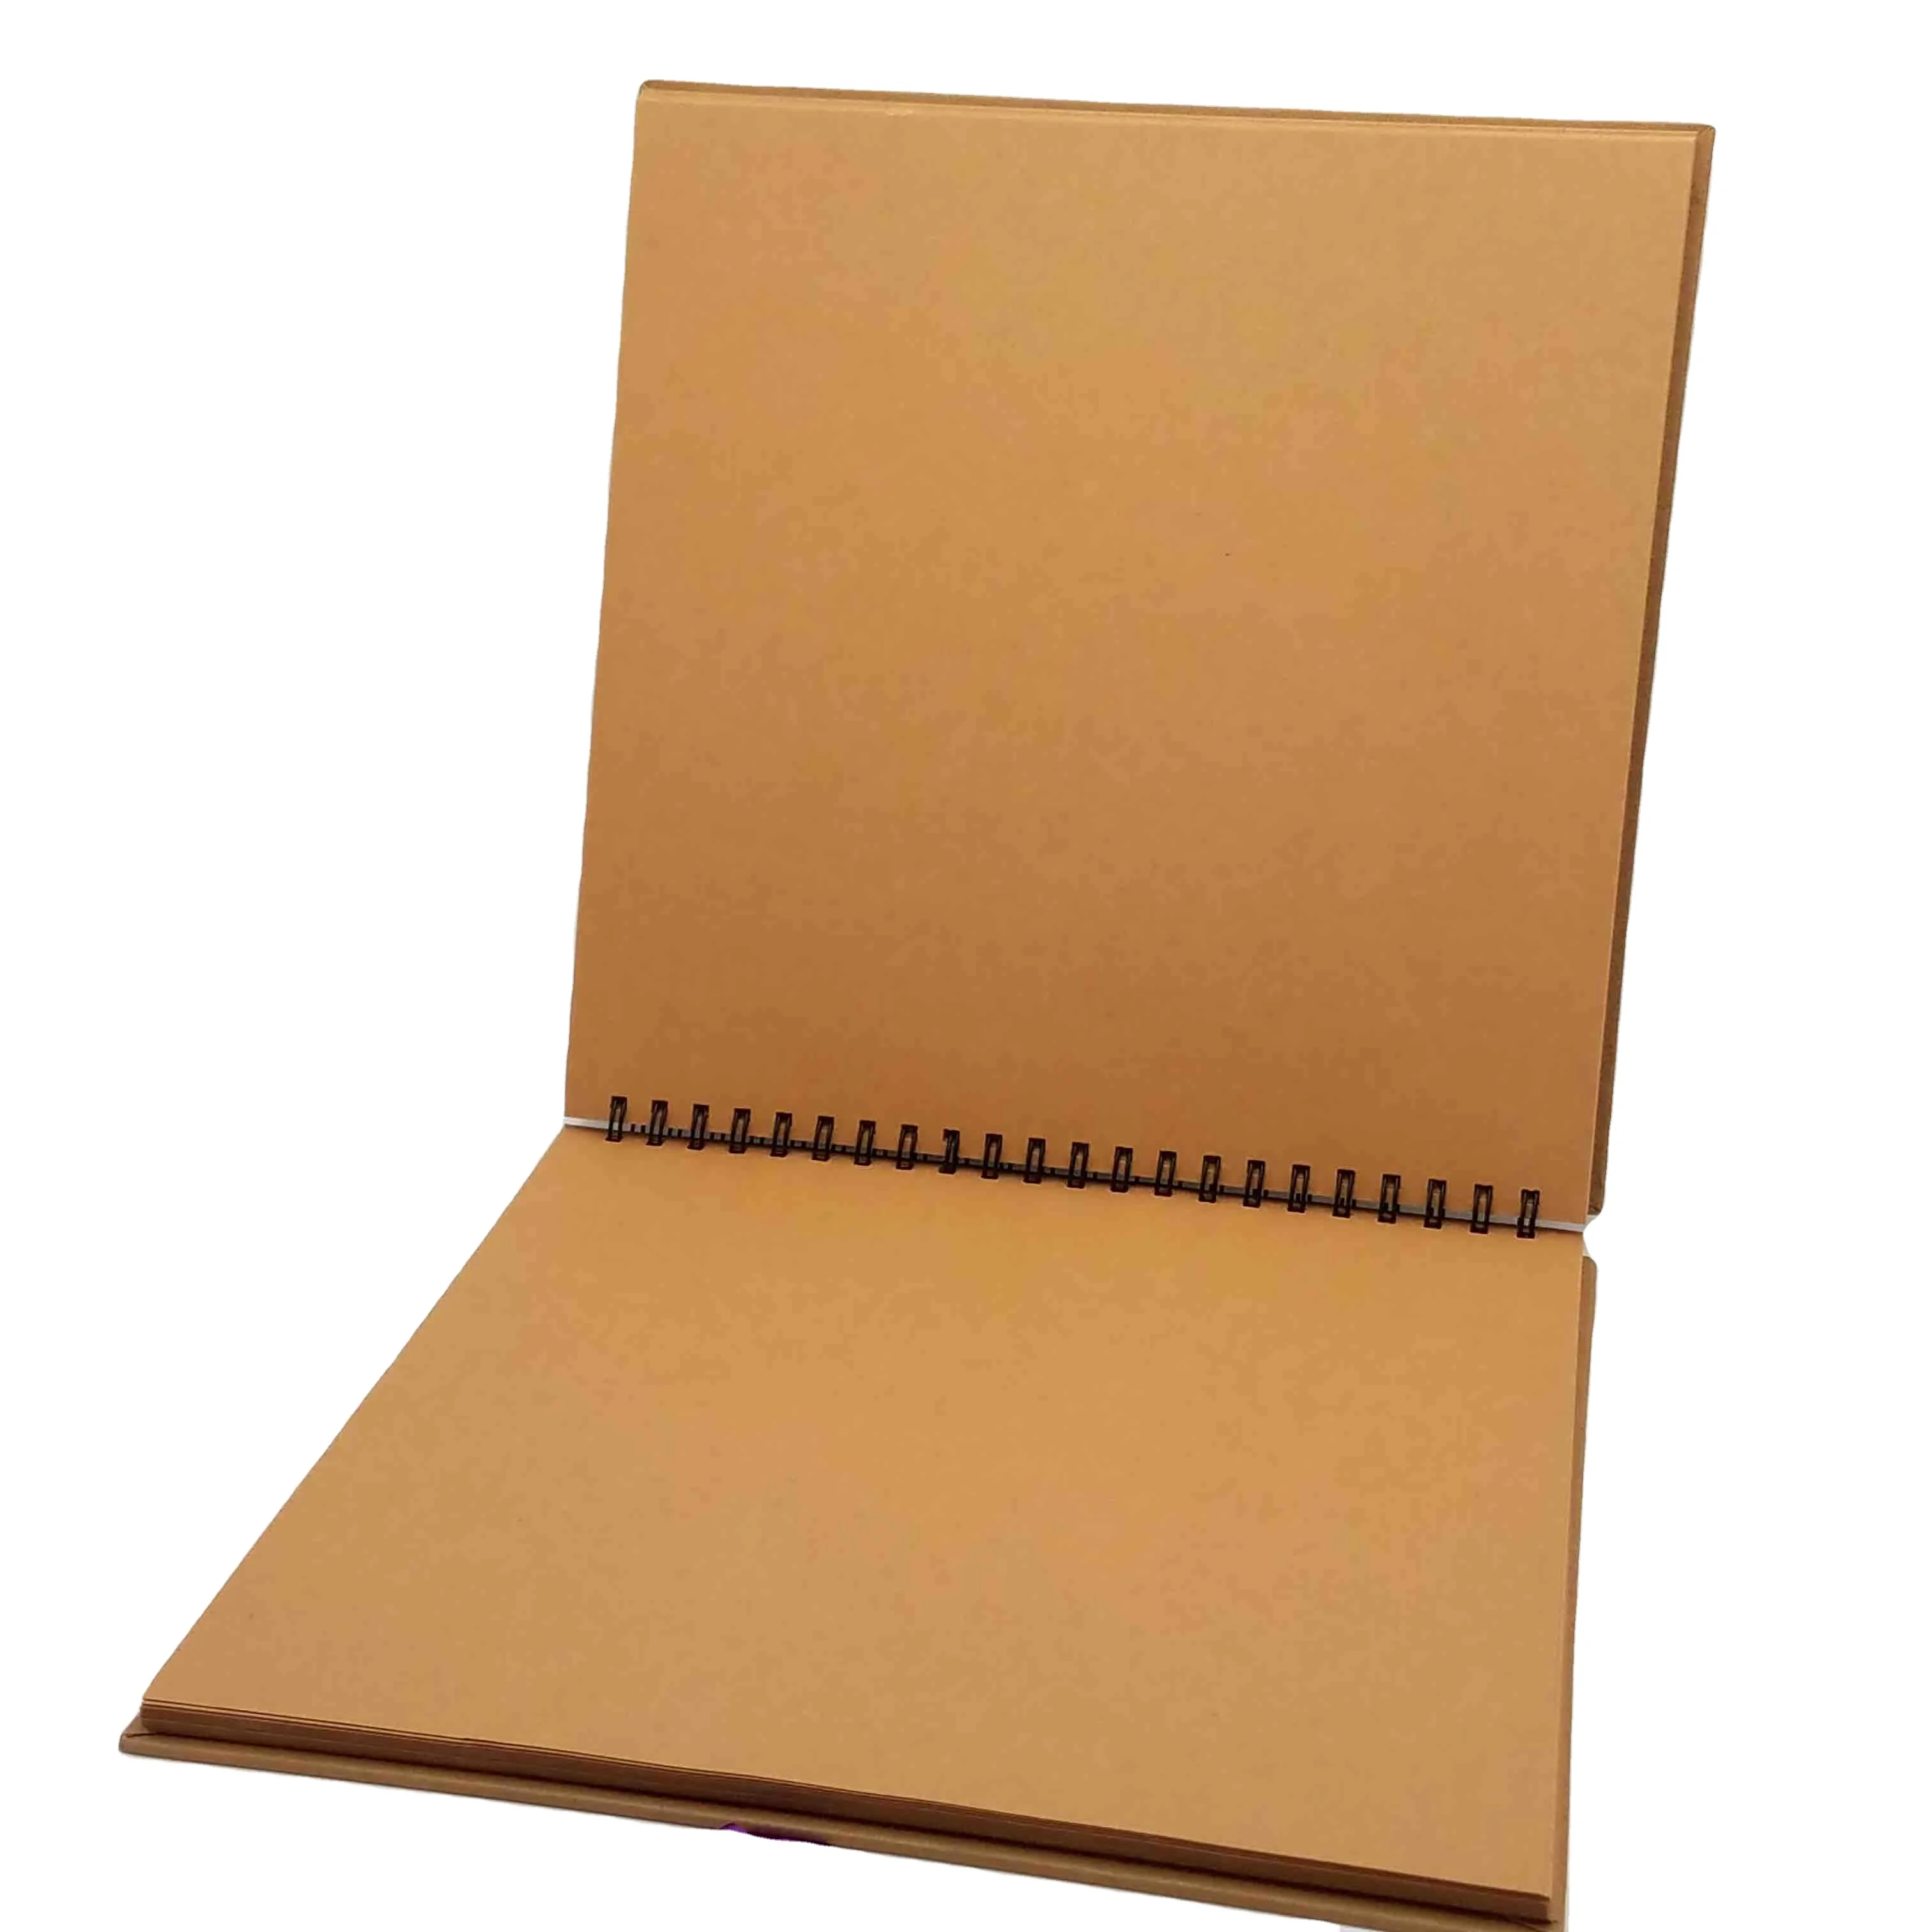 12x12 Scrapbook Album Hardcover (Blank), Kraft Paper Material